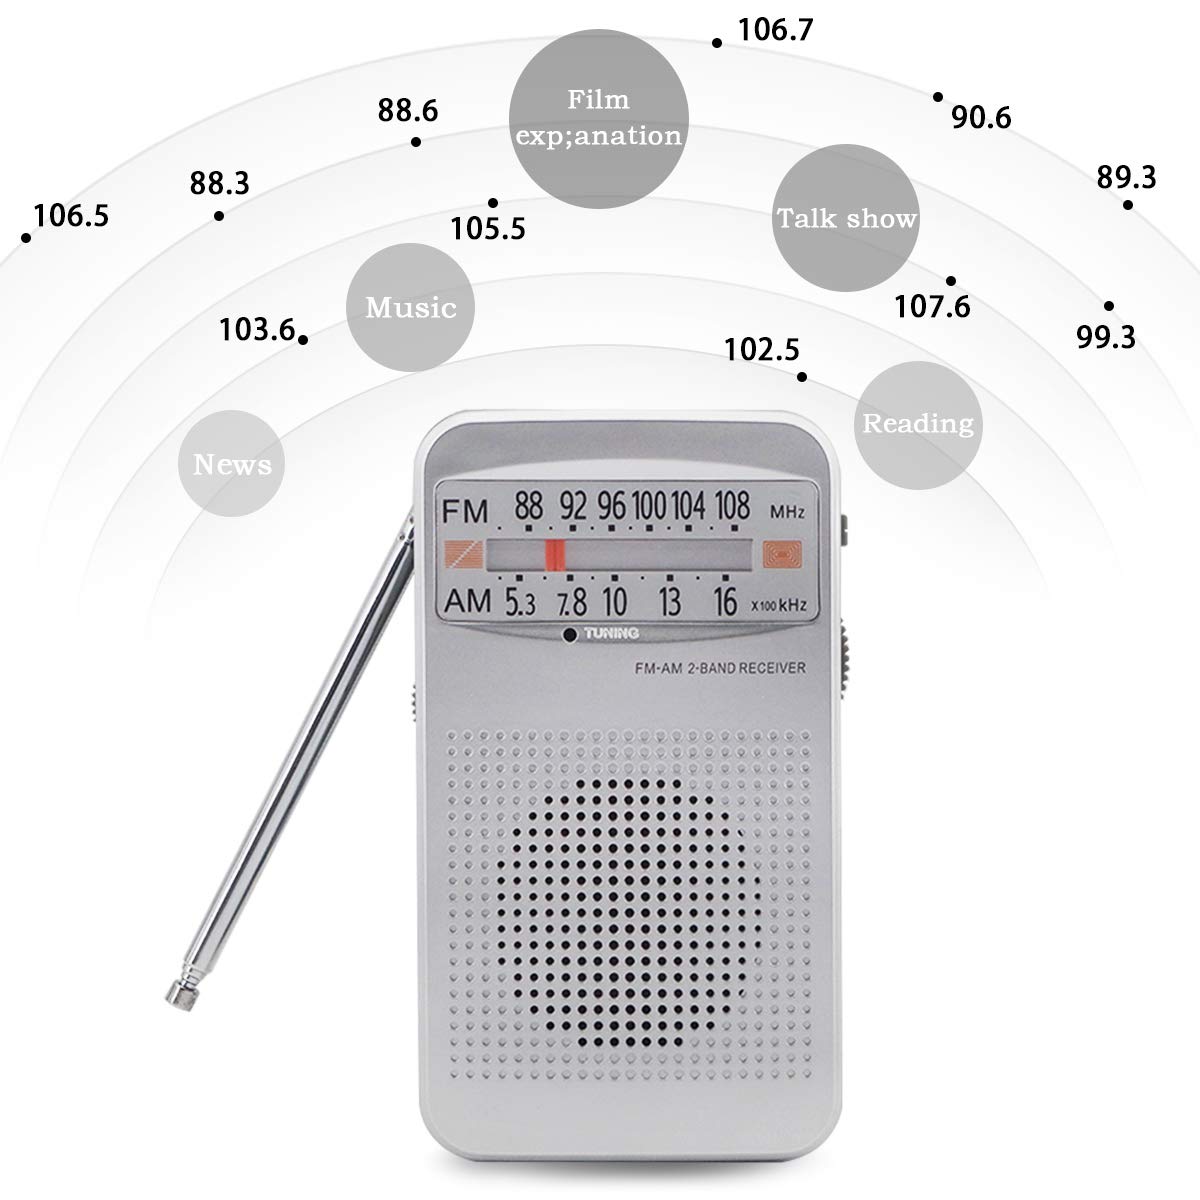 FUHONGYUAN AM FM Portable Pocket Radio, Compact Transistor Radios - Best Reception, Loud Speaker, Earphone Jack, Long Lasting, 2 AA Battery Operated (Silver)